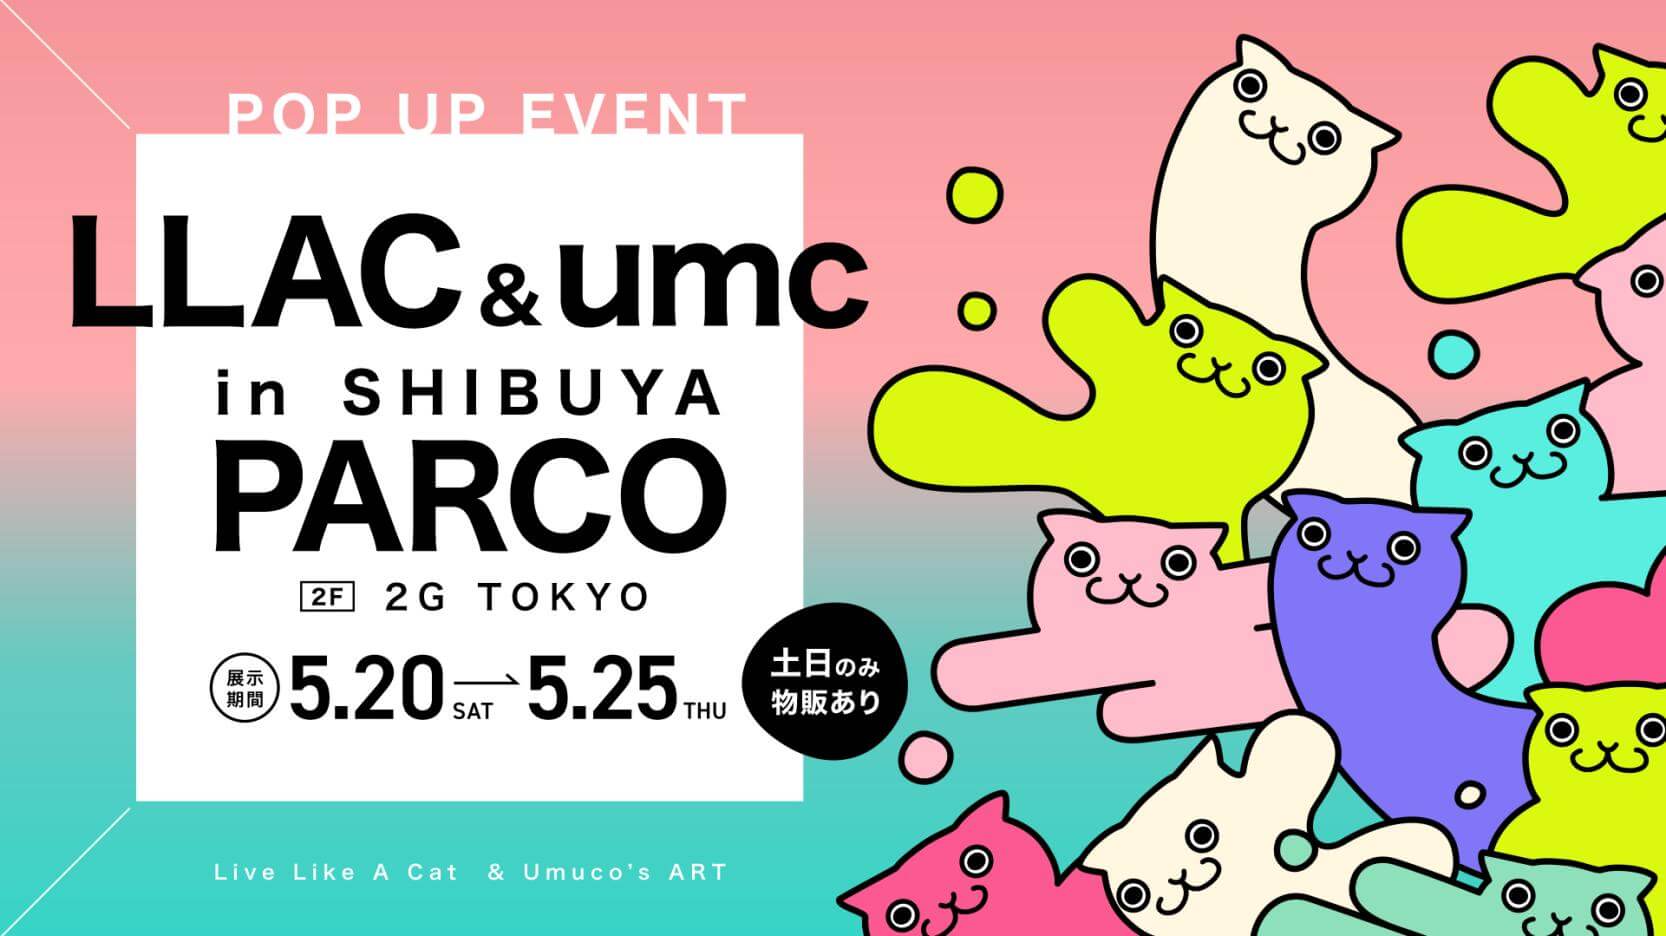 「LLAC & umc POP UP EVENT」渋谷パルコ開催